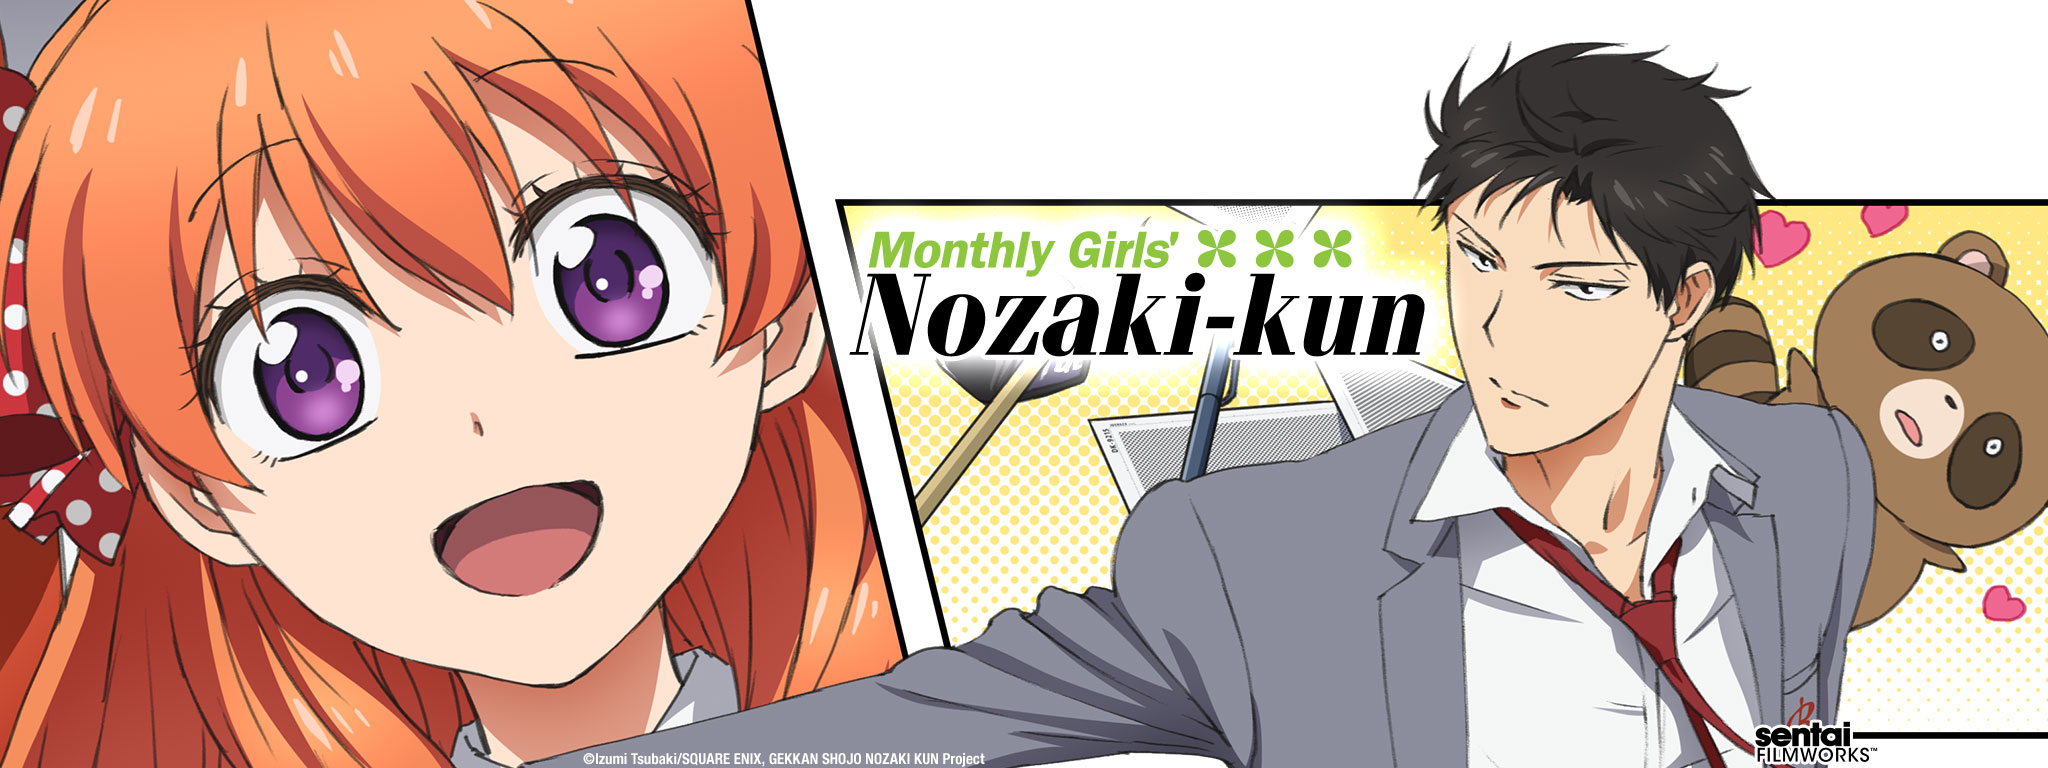 Title Art for Monthly Girls' Nozaki-kun